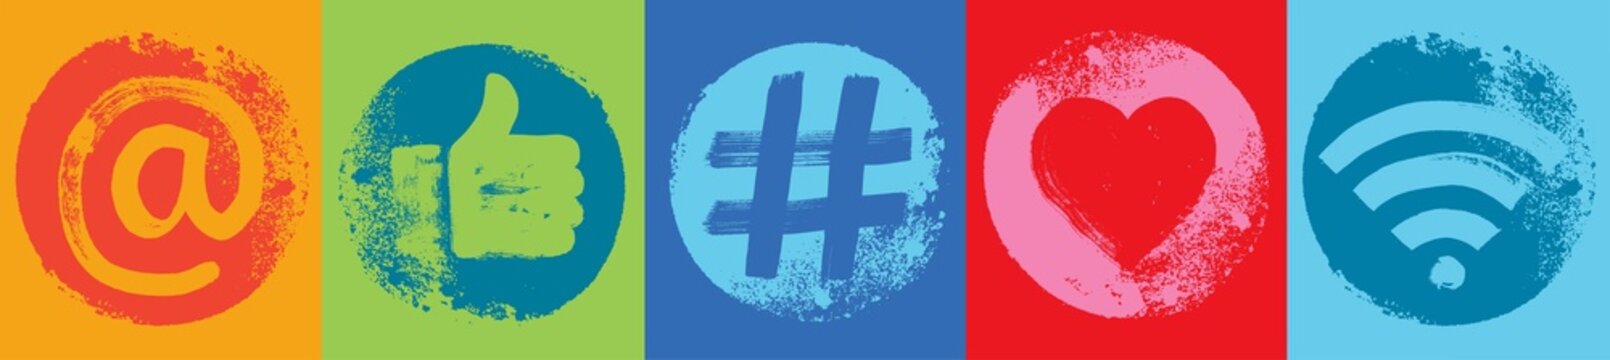 Five Social Media Symbols, Wide Format Web Banner